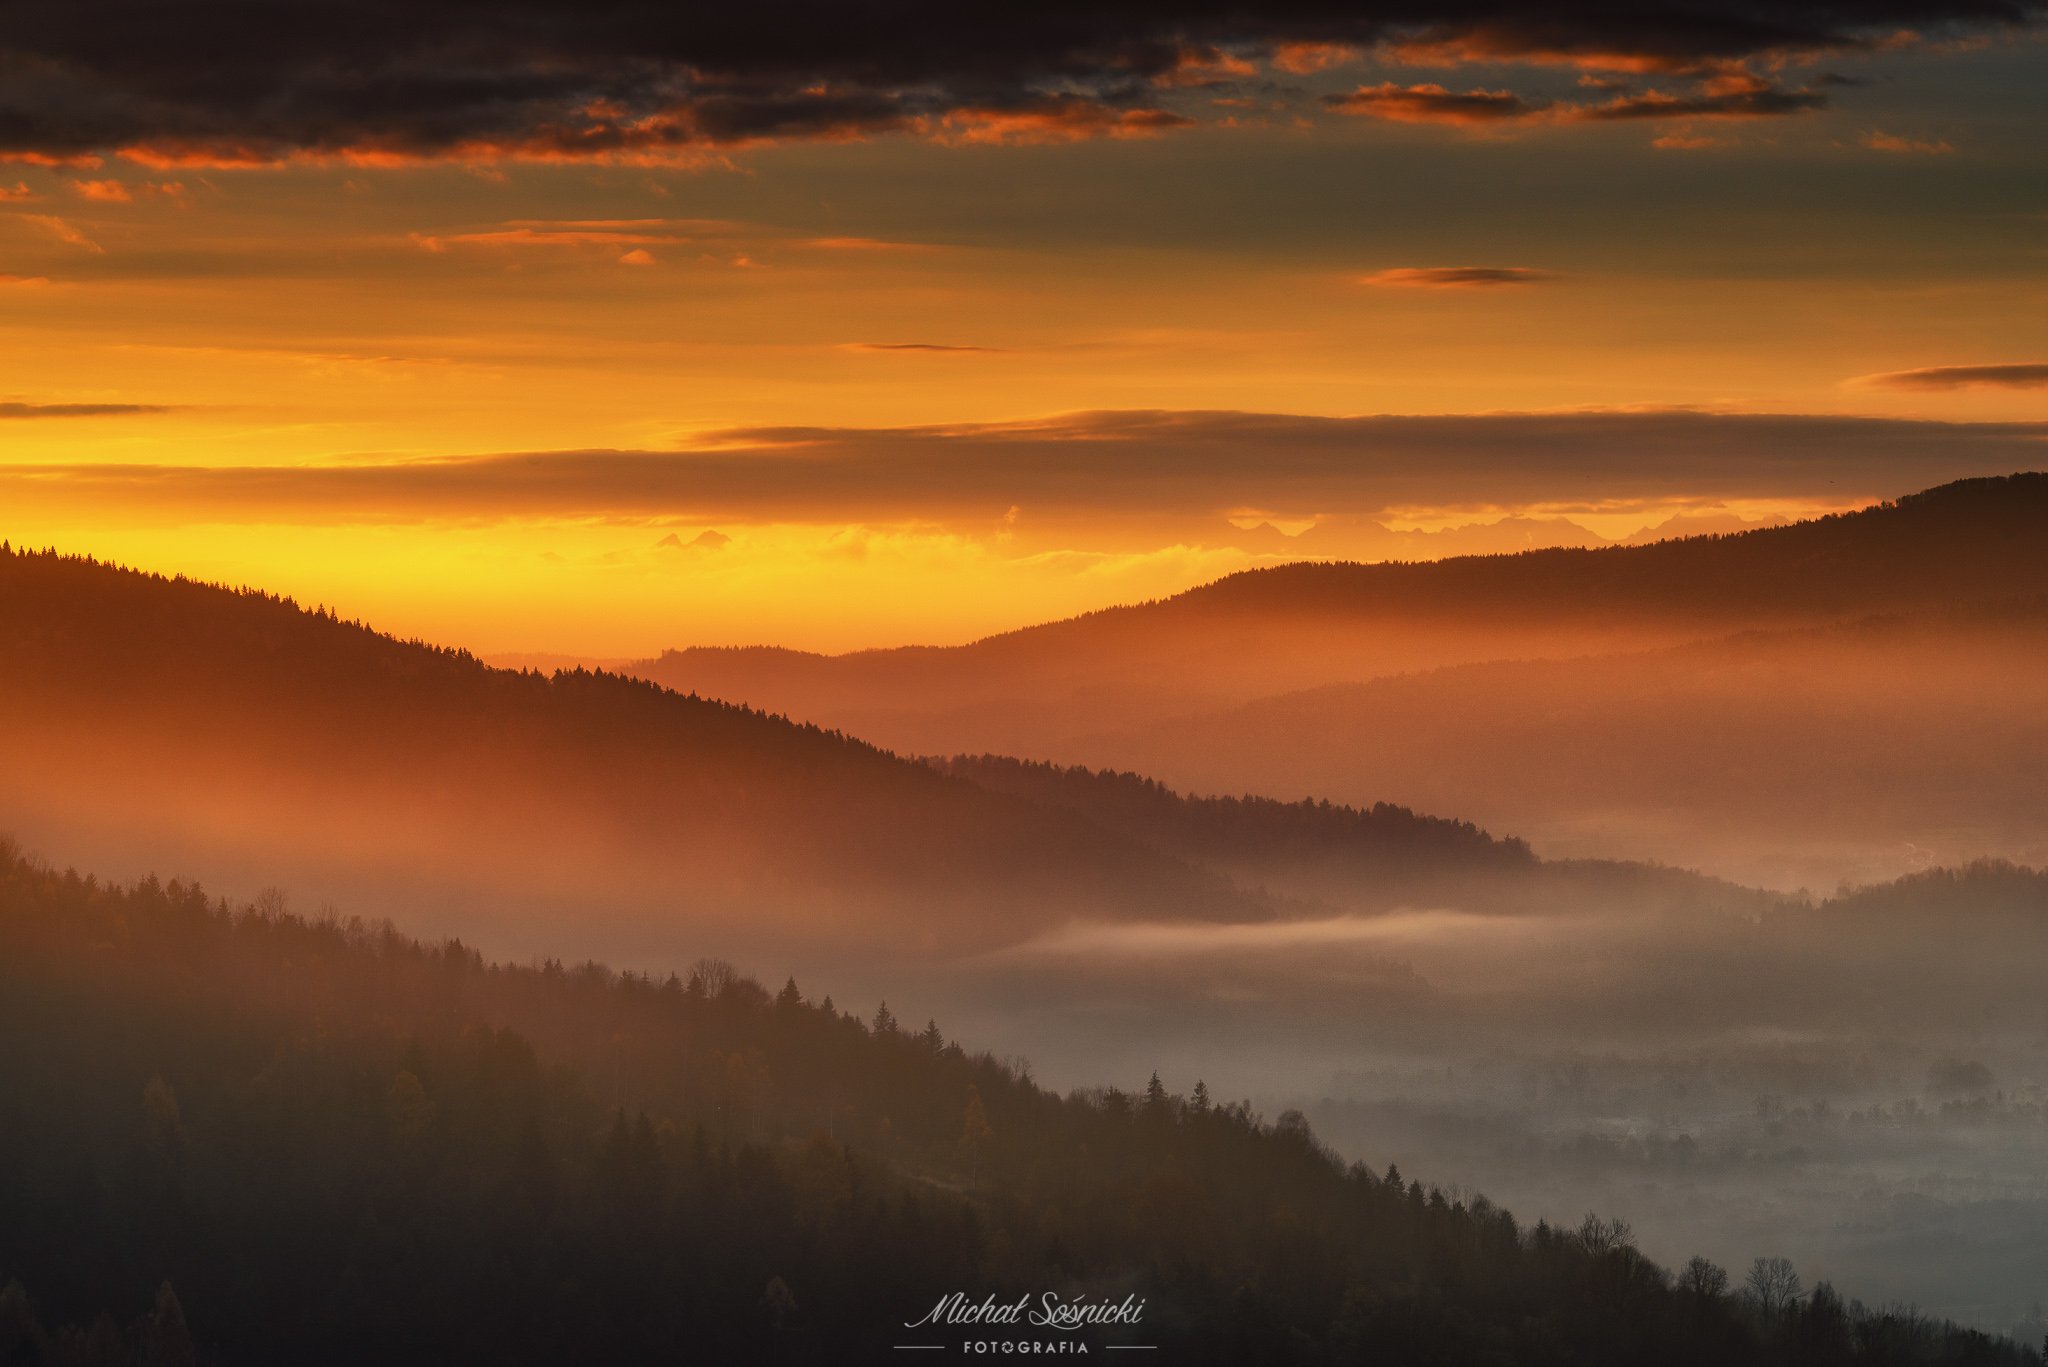 #today #morning #sunrise #poland #benro #pentax #mountains #foggy, Michał Sośnicki